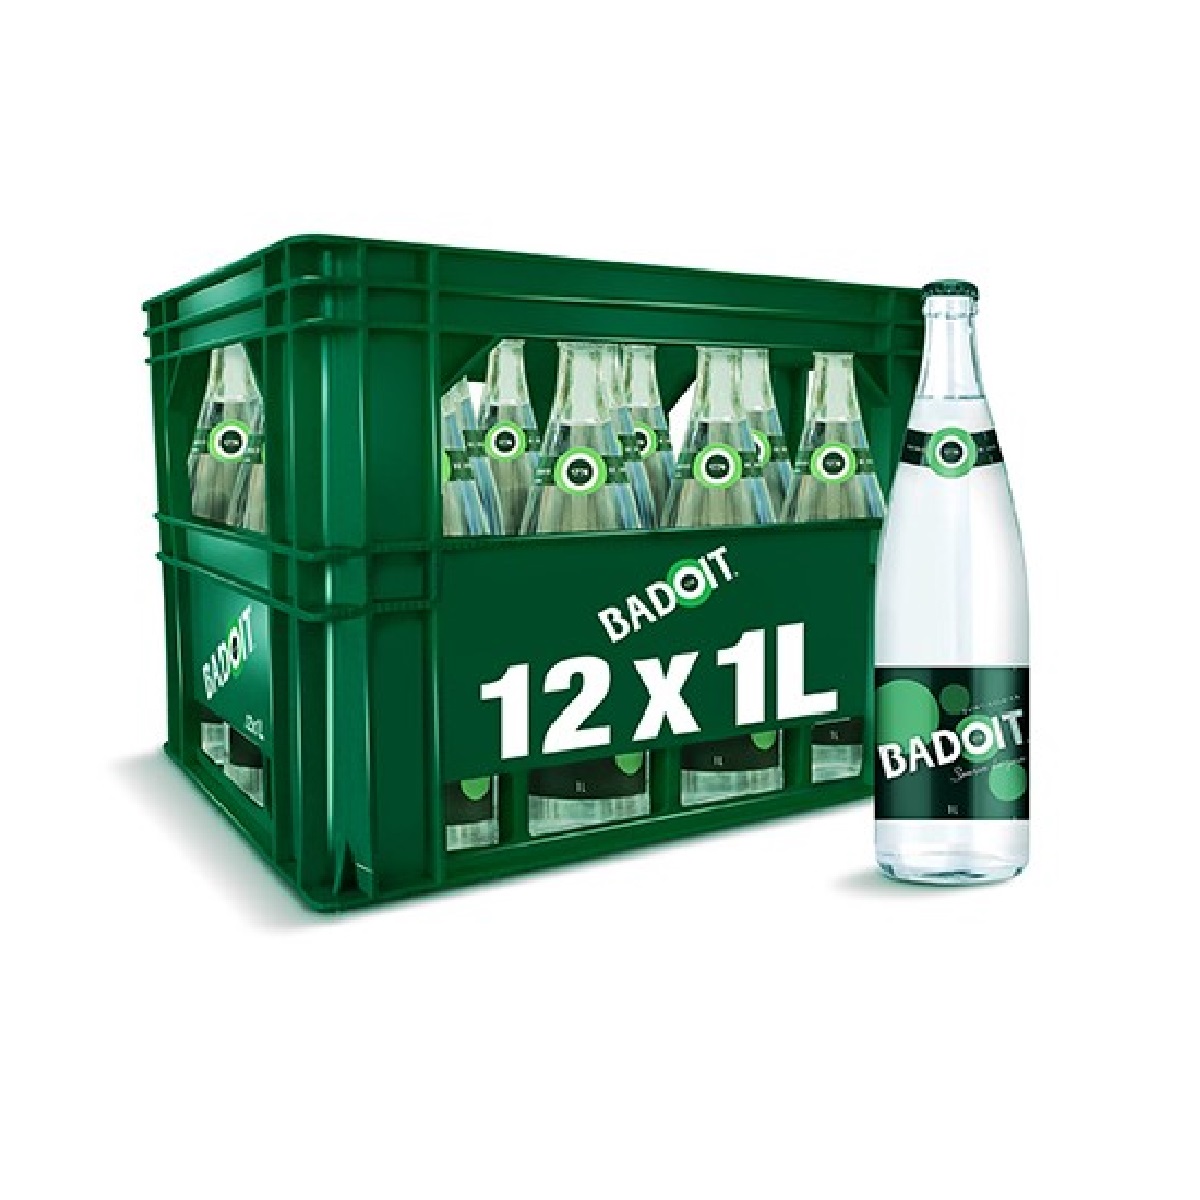 Badoit sparkling mineral water glass bottle 12x1L